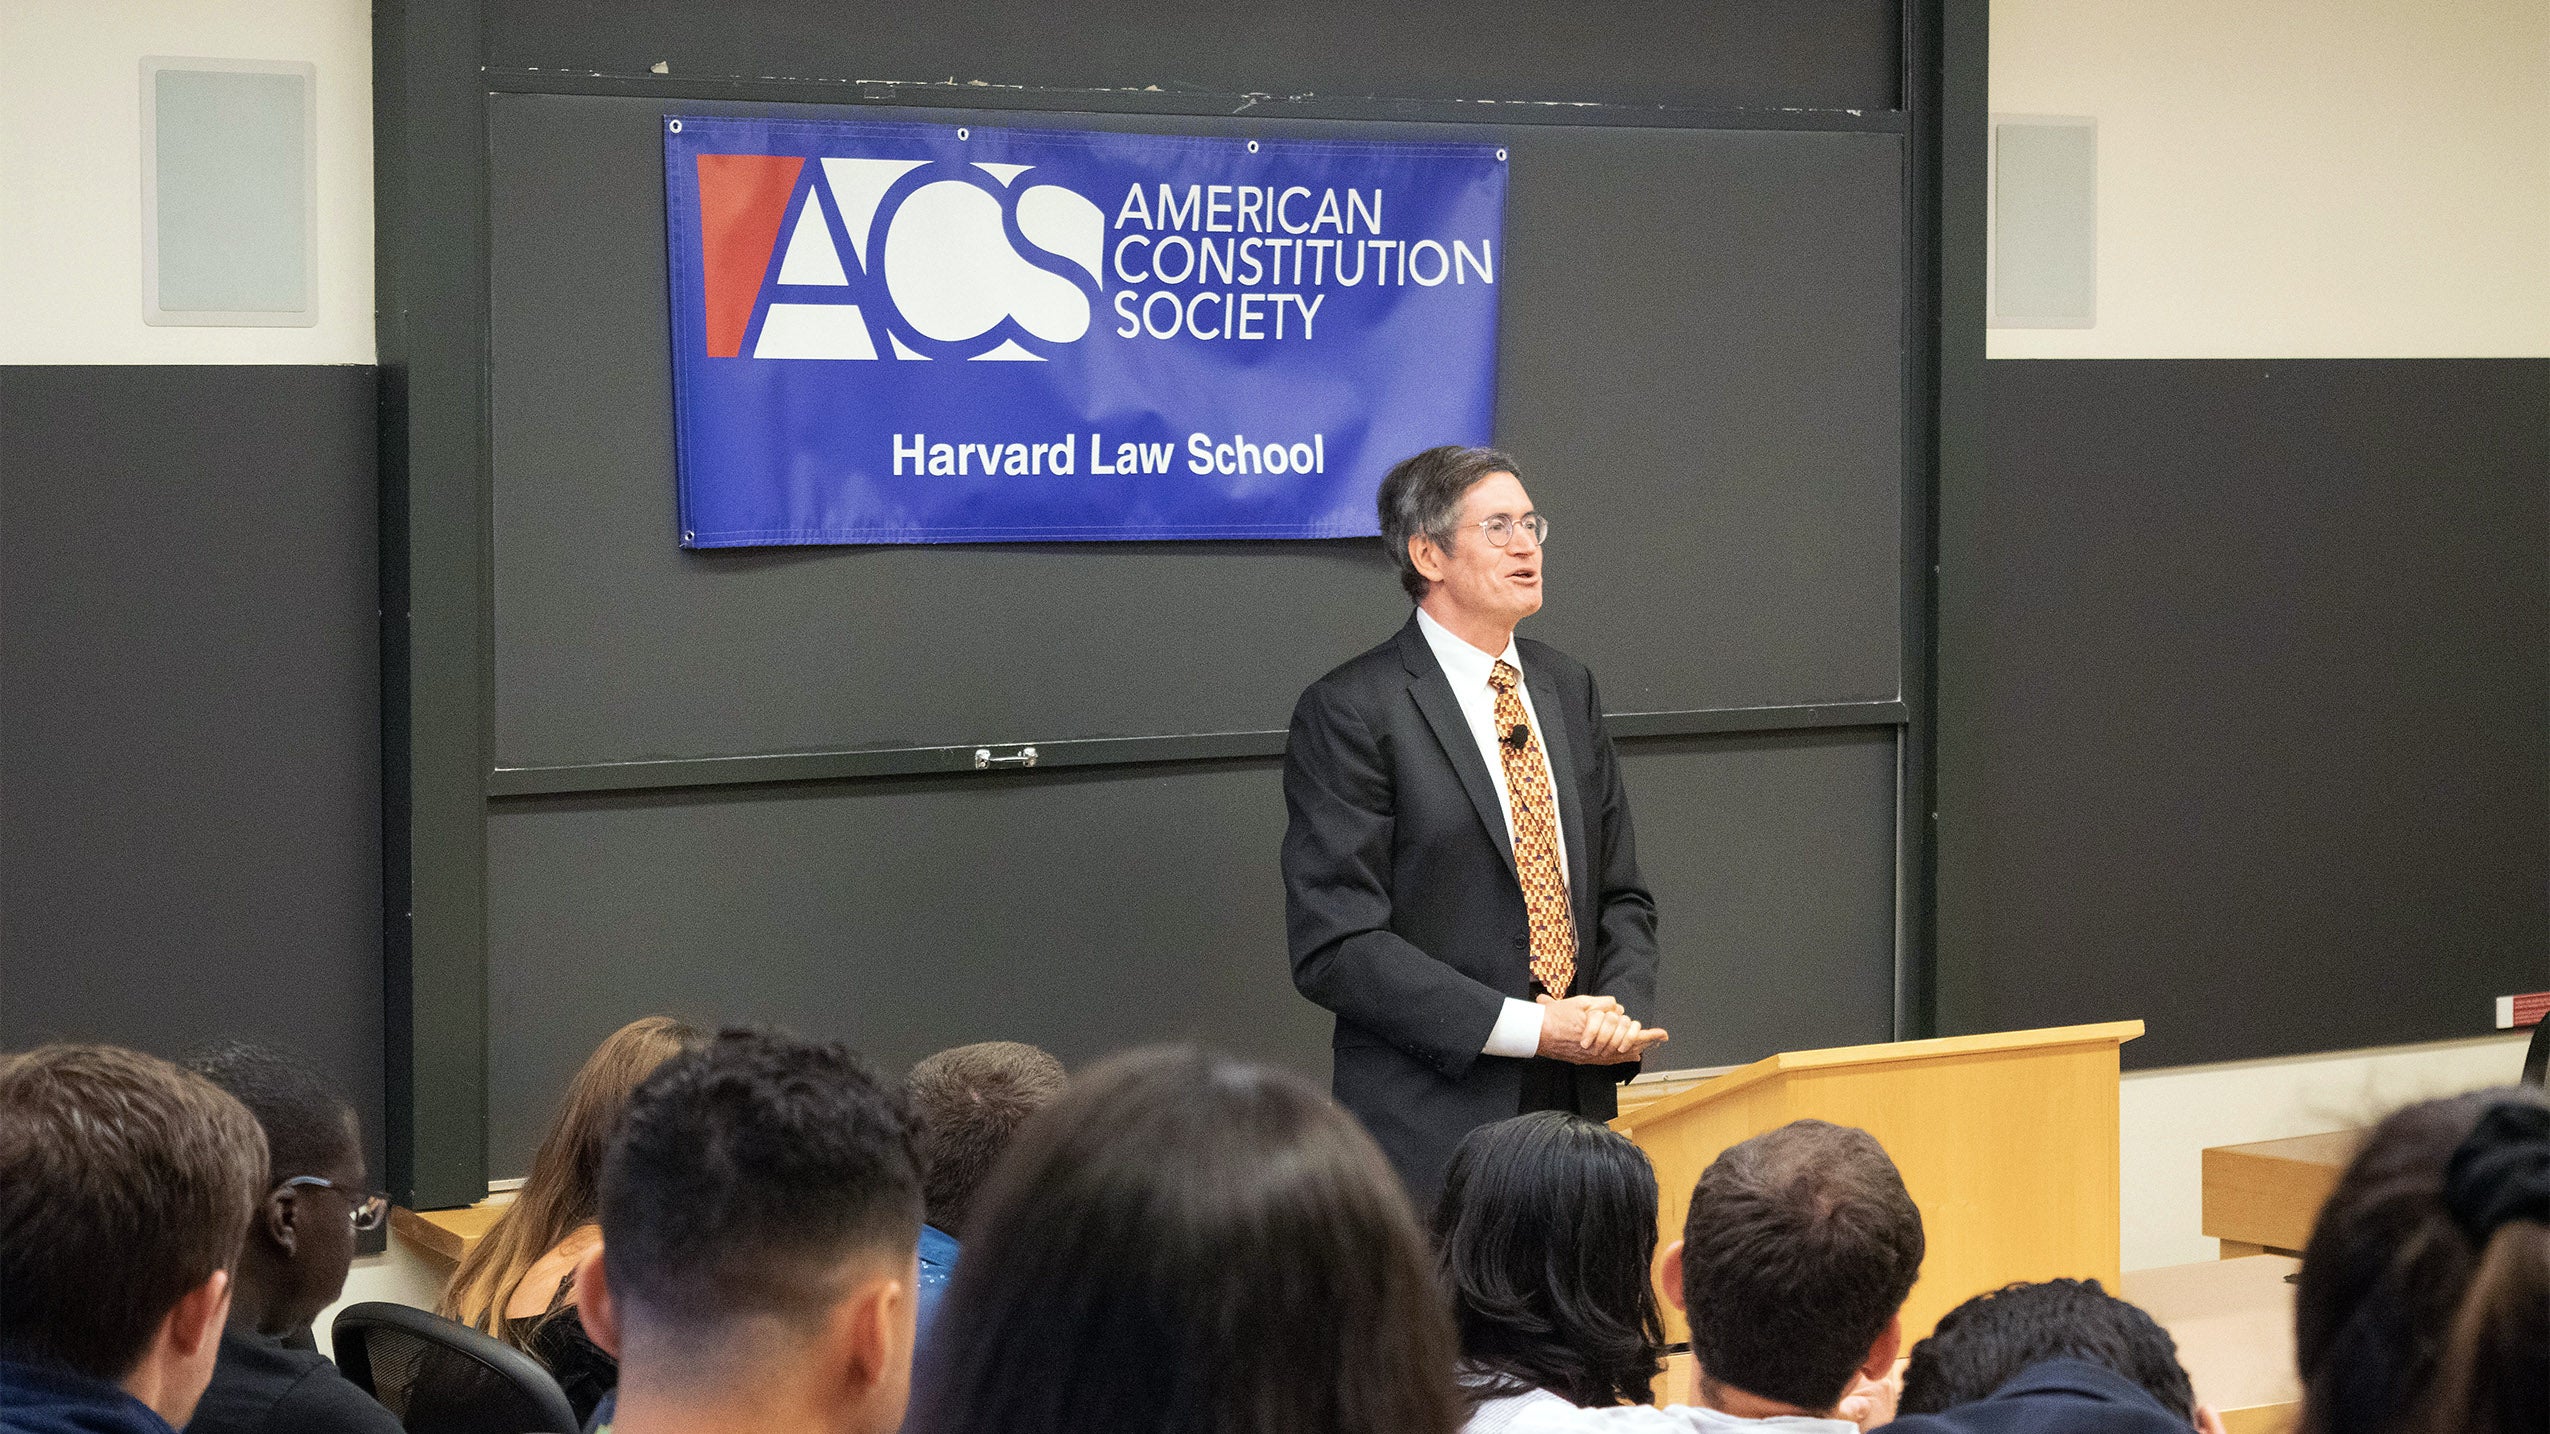 Michael Klarman speaking at Harvard Law School on Constitution Day